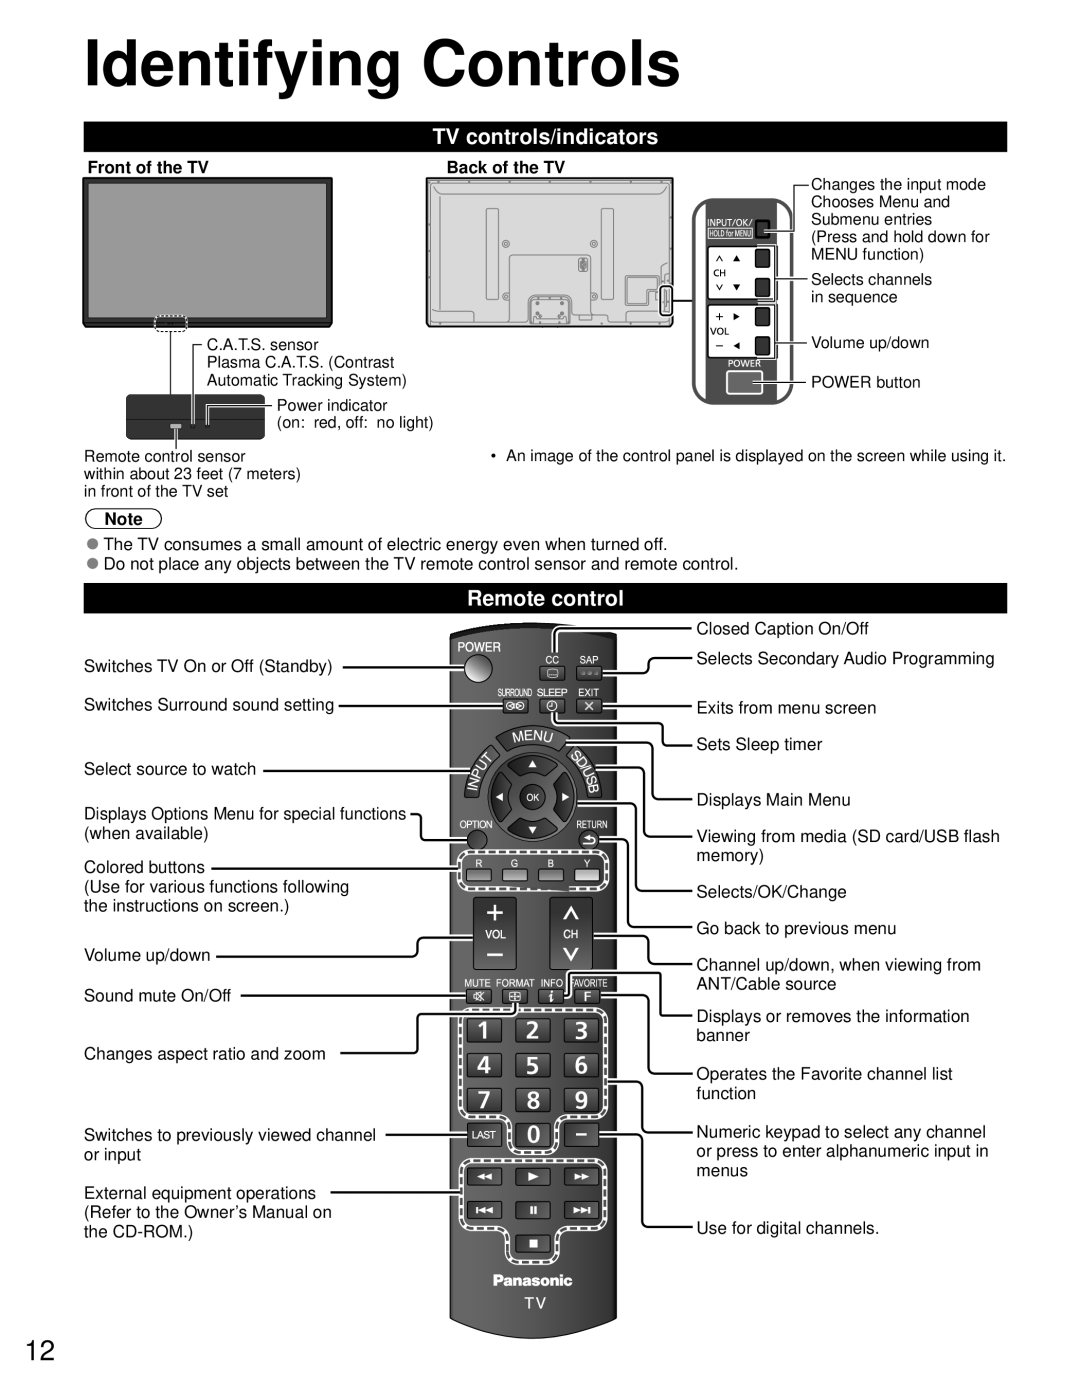 Panasonic TC-P60U50 owner manual Identifying Controls, TV controls/indicators, Remote control, Front of the TV 